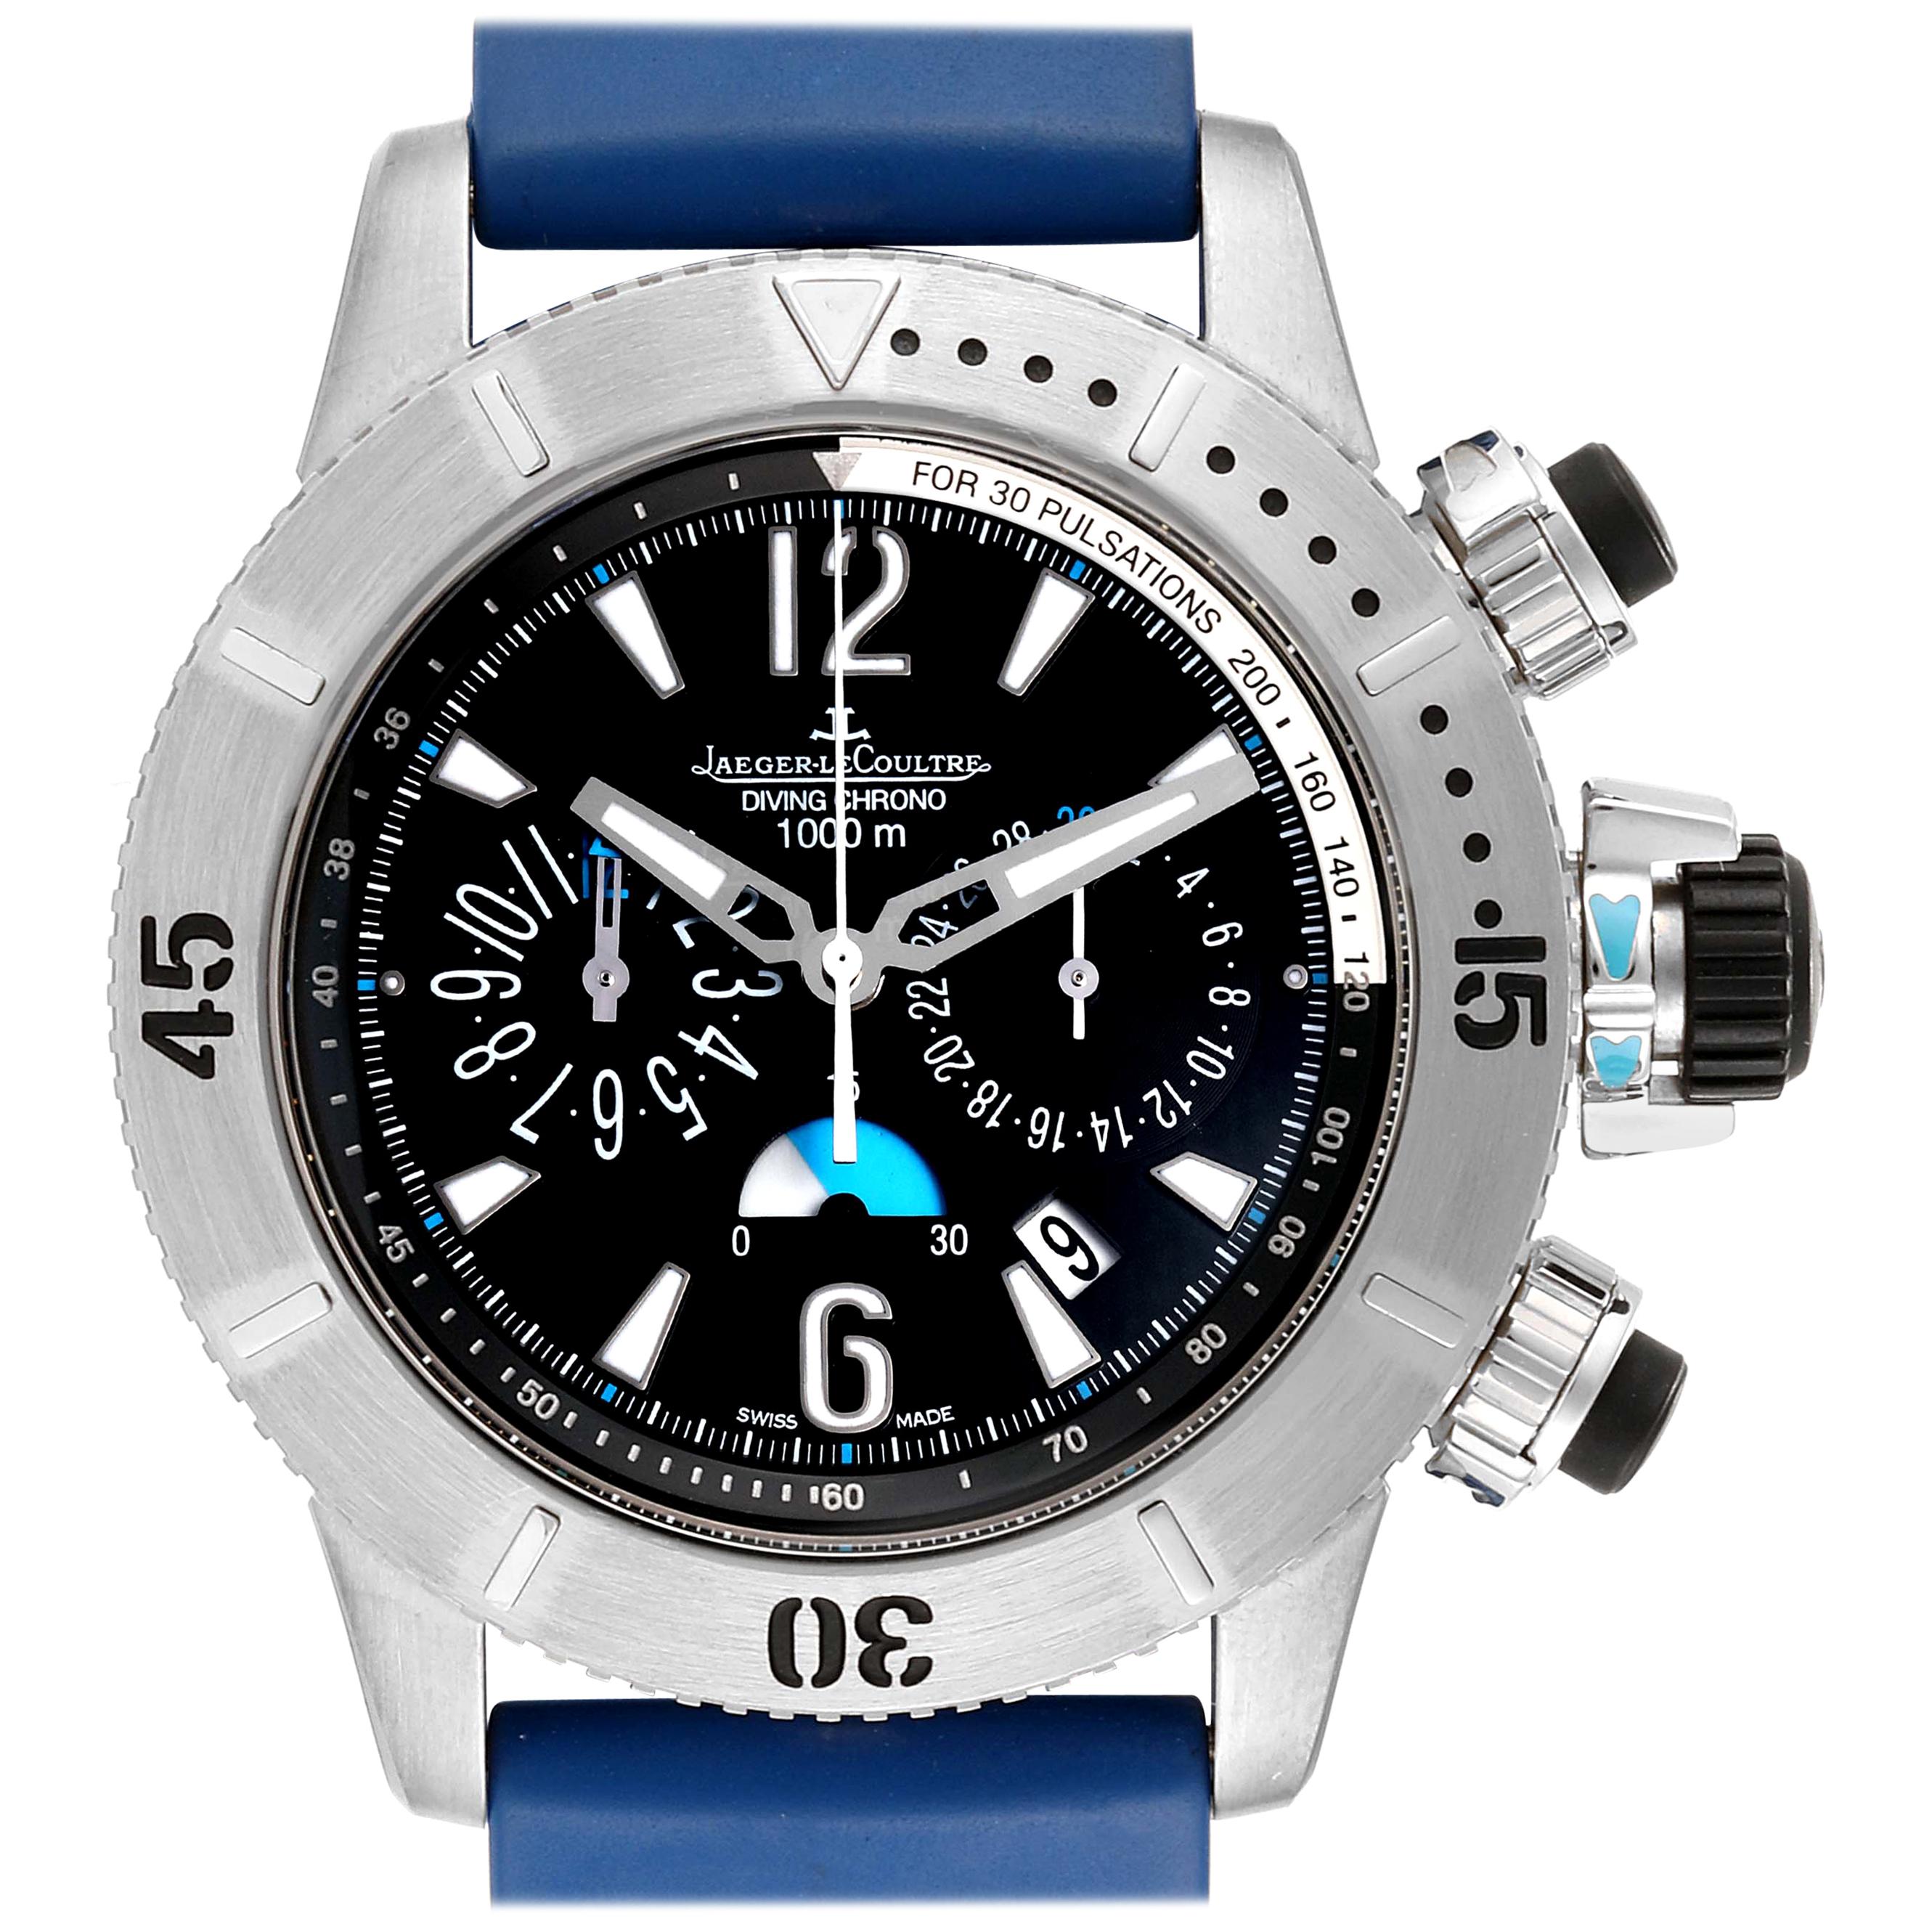 Jaeger-LeCoultre Master Compressor Diving Chrono Titanium Watch 160.T.25 For Sale